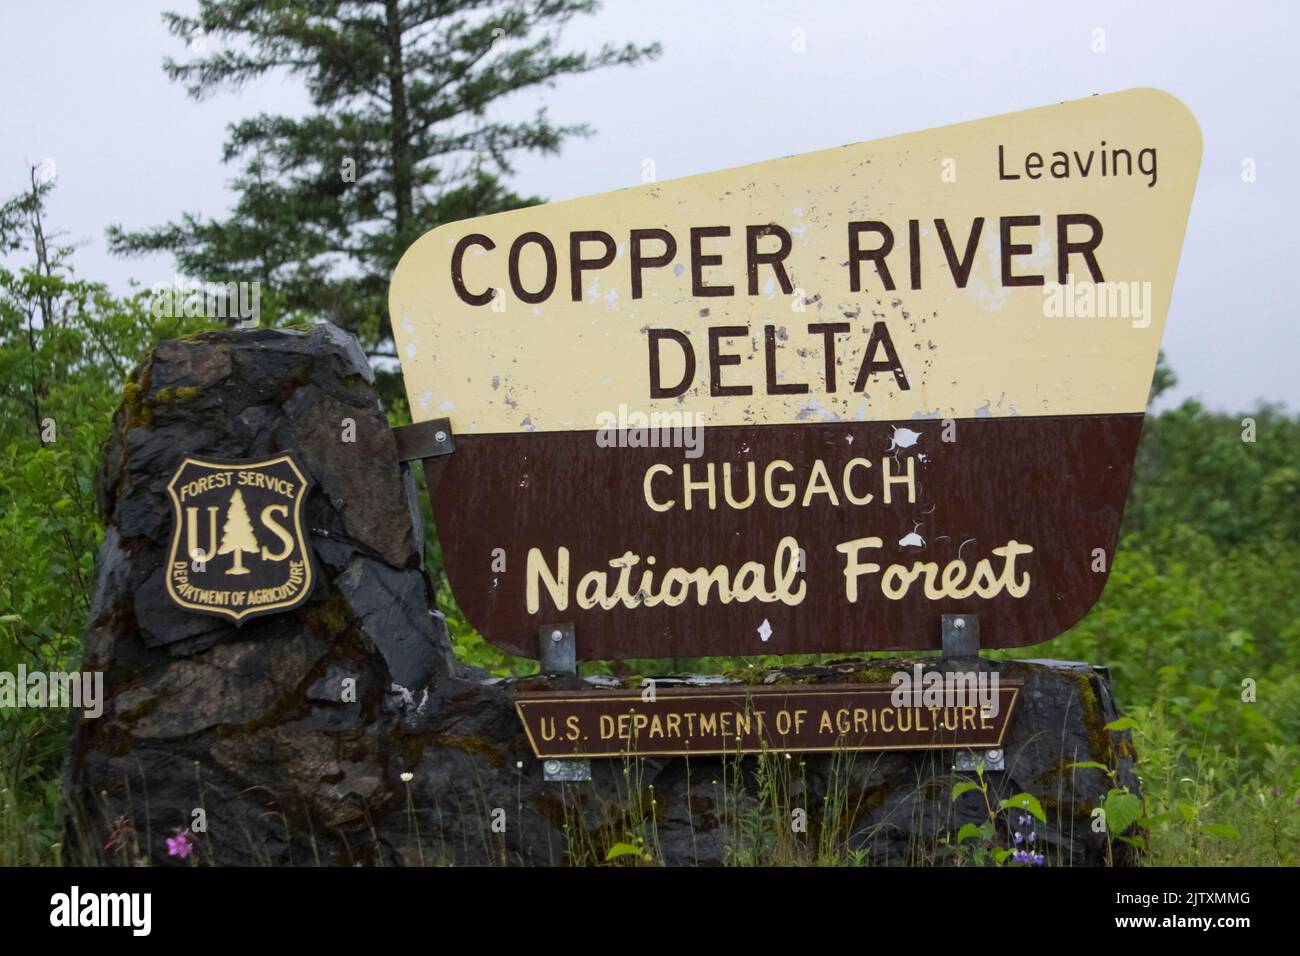 The Copper River Delta, Alaska and Chugach National Forest, Alaska Stock Photo